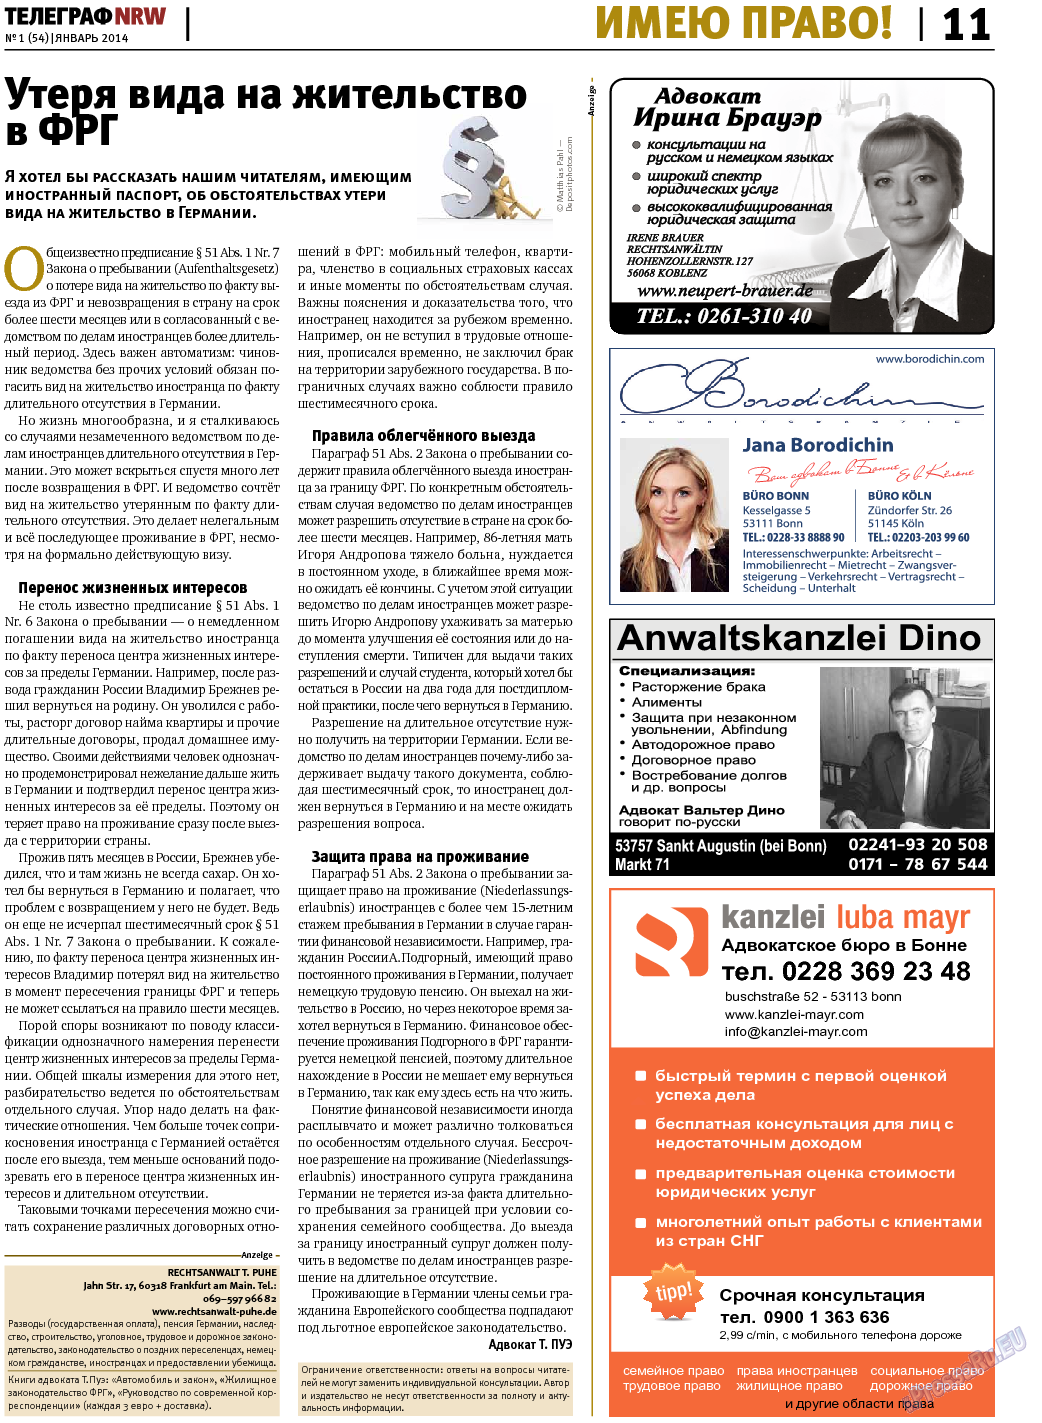 Телеграф NRW, газета. 2014 №1 стр.11